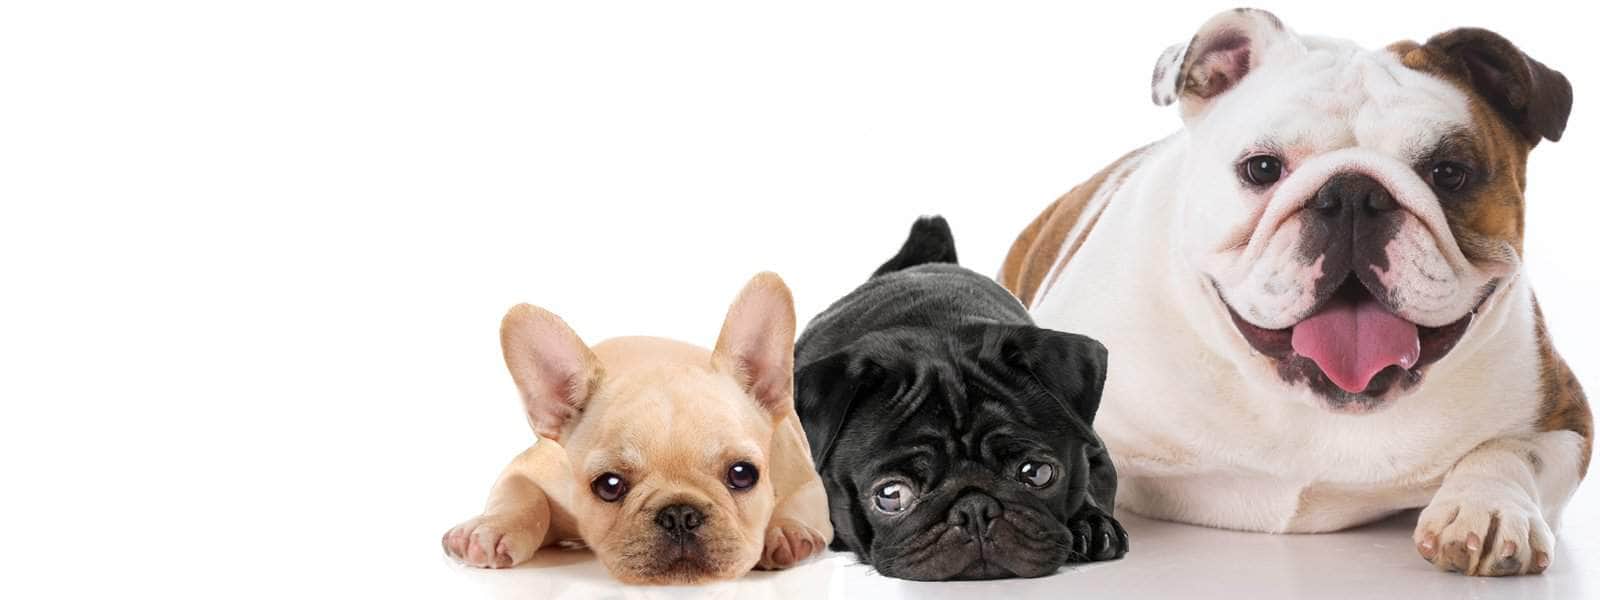 Brachycephalic syndrome…common in French Bulldogs, Pugs etc.